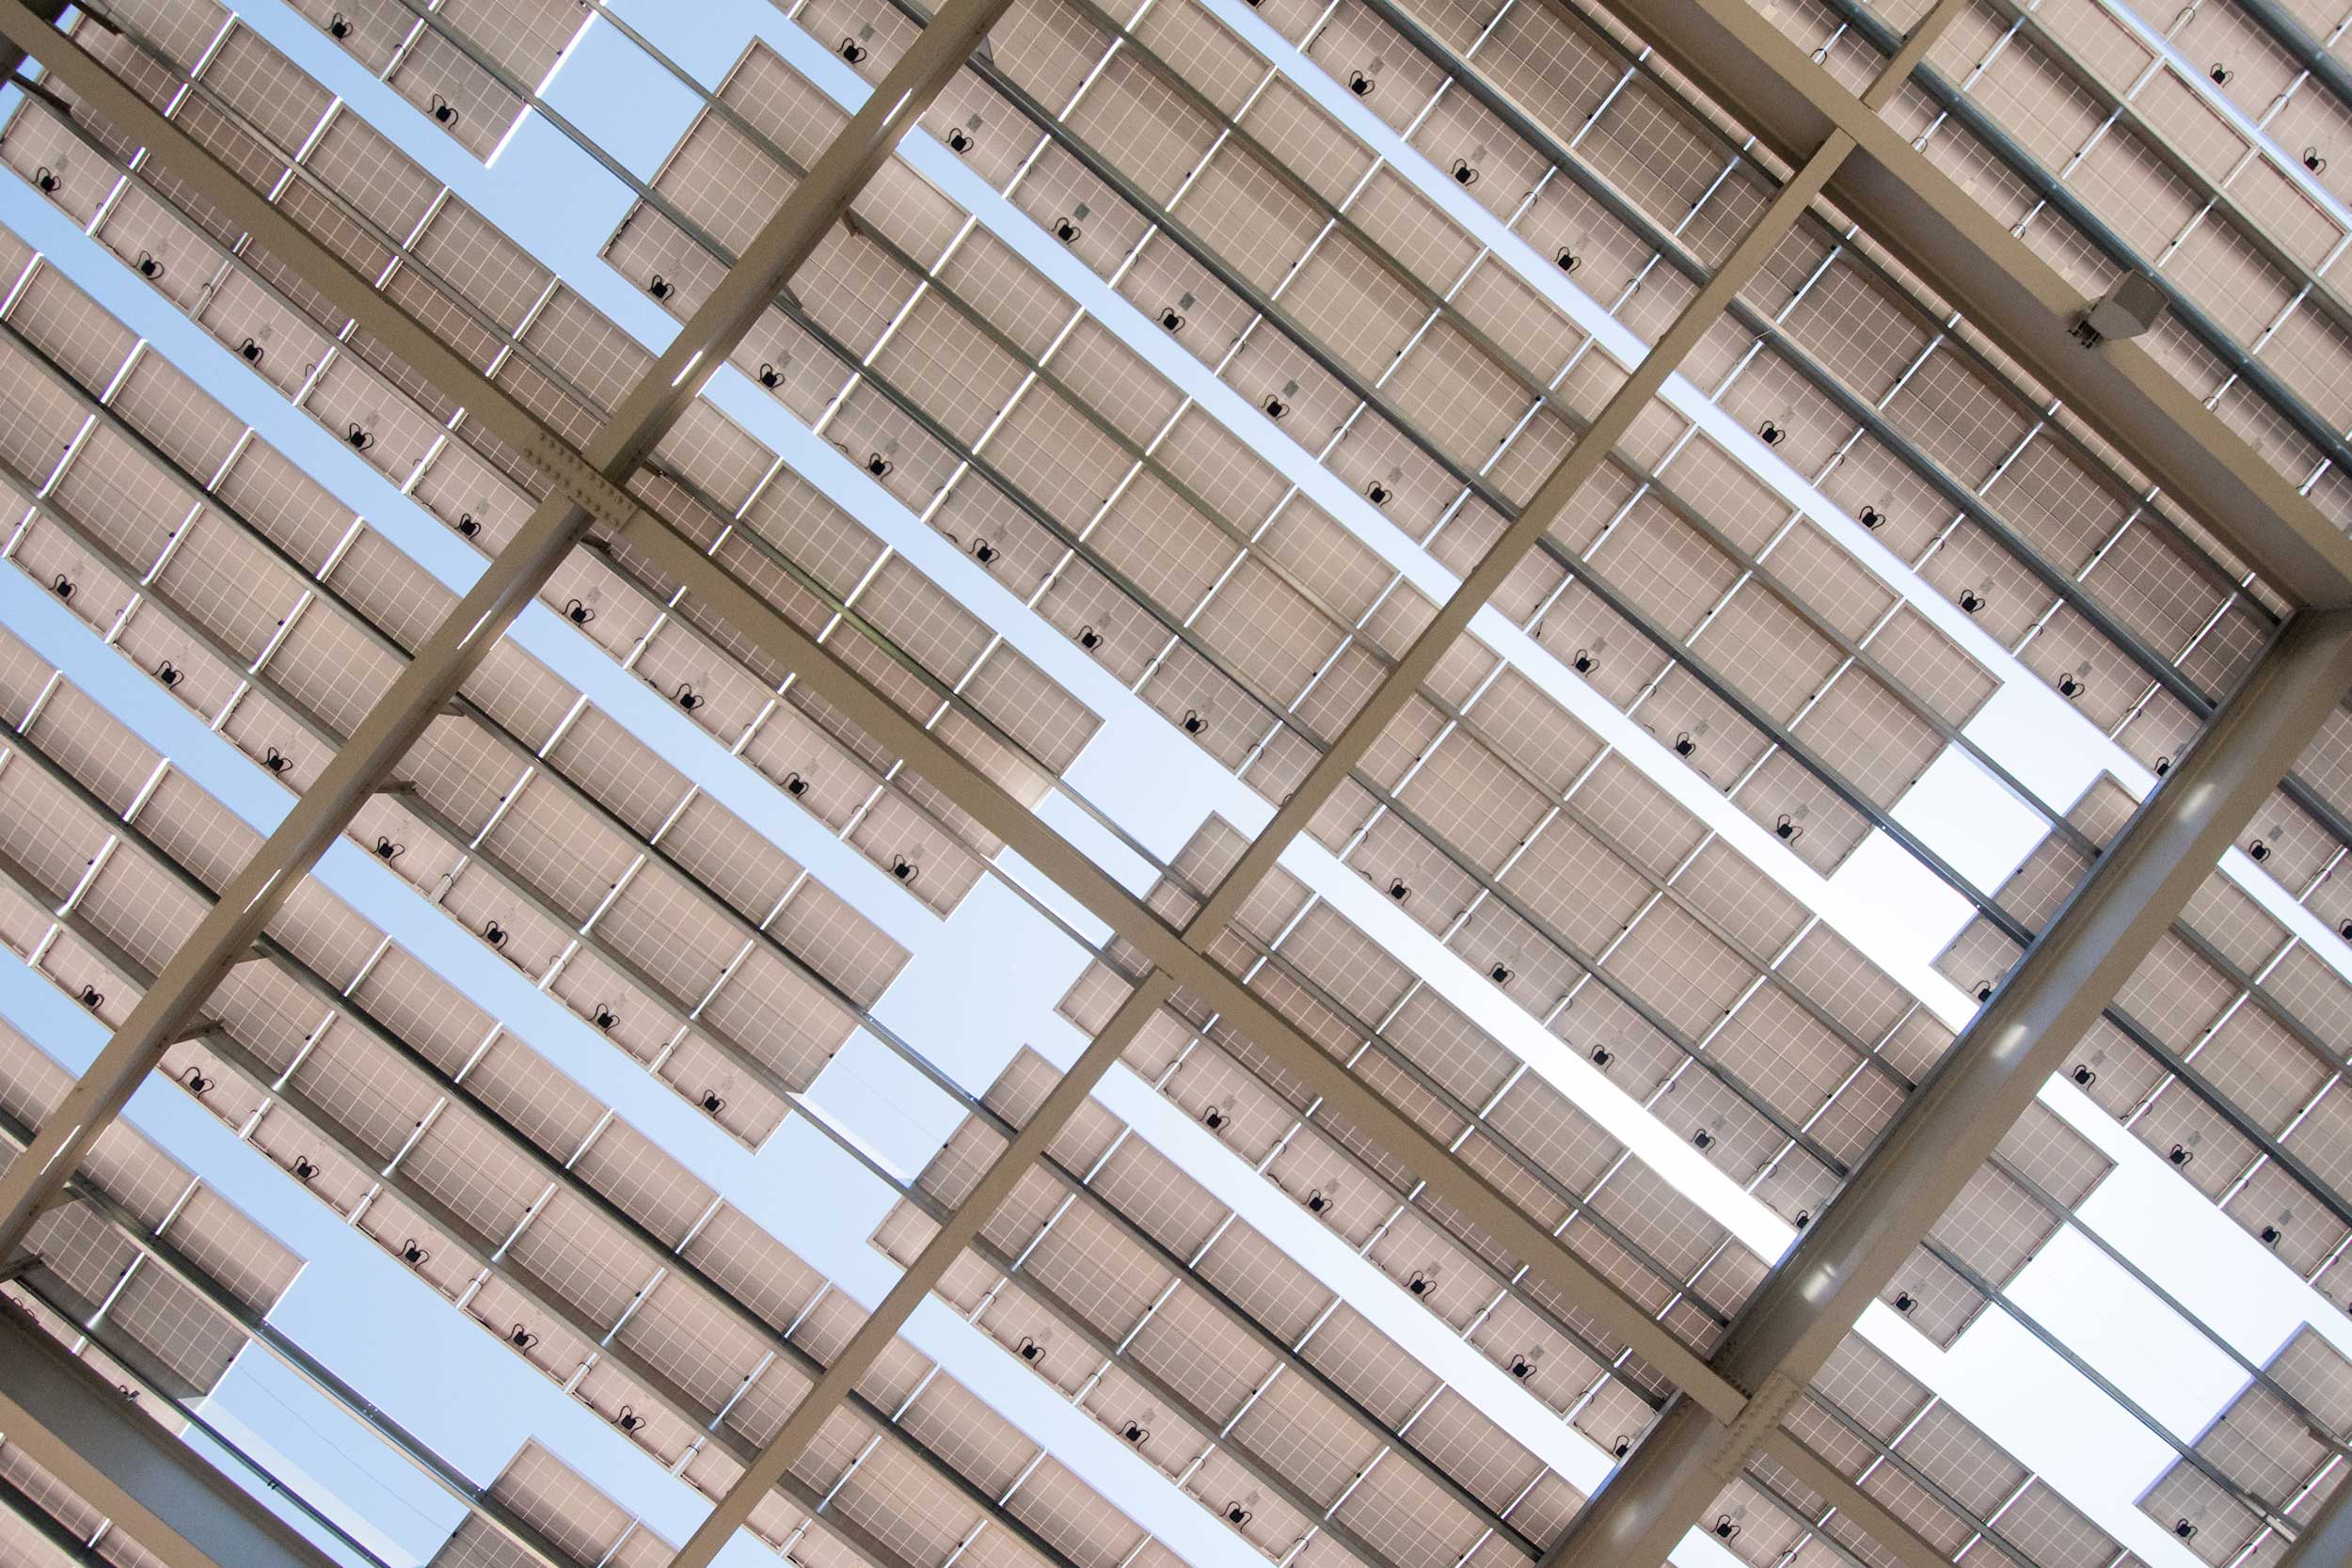 Solar panels at ASU creating a shade structure underneath.